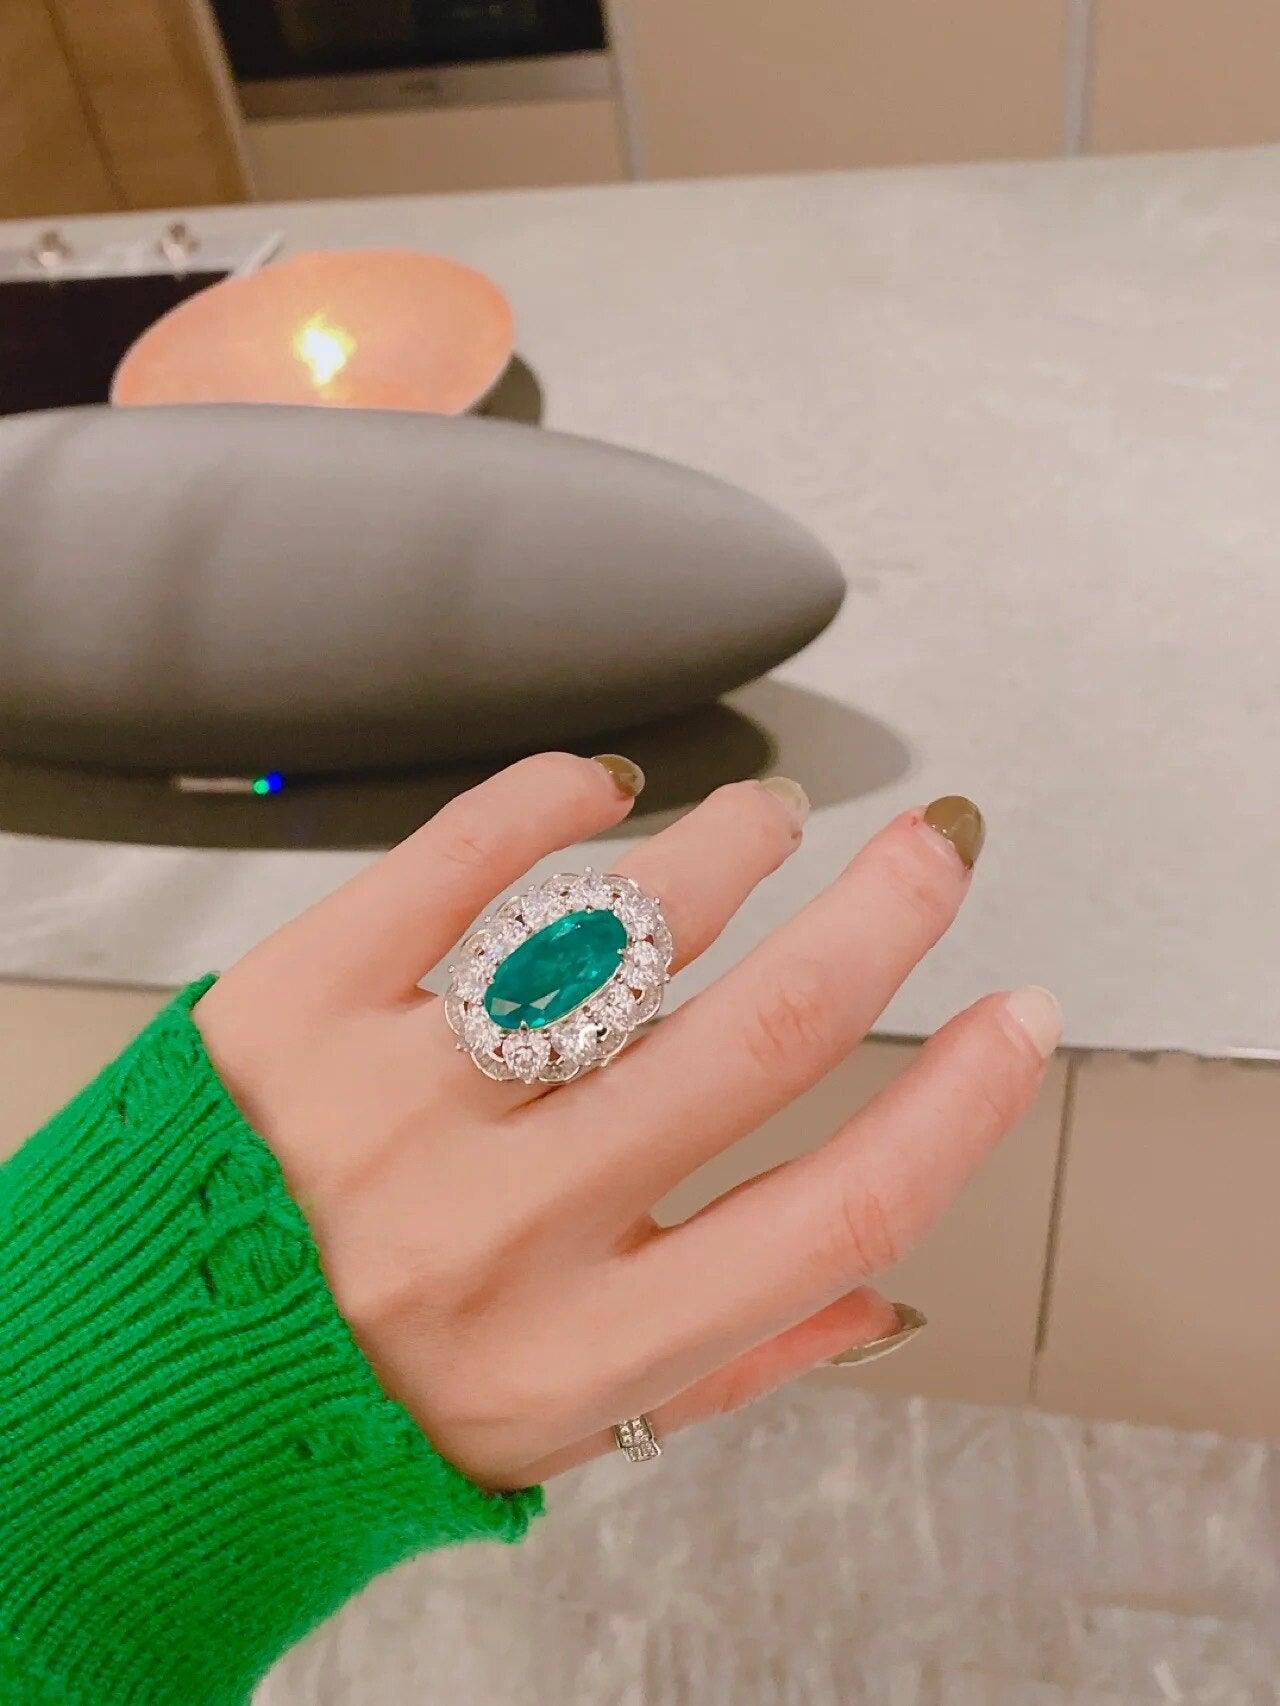 New Luxury Jewelry Oval Cut Flower Design Inlaid Green AAA+ Quality CZ Diamonds Ring - The Jewellery Supermarket